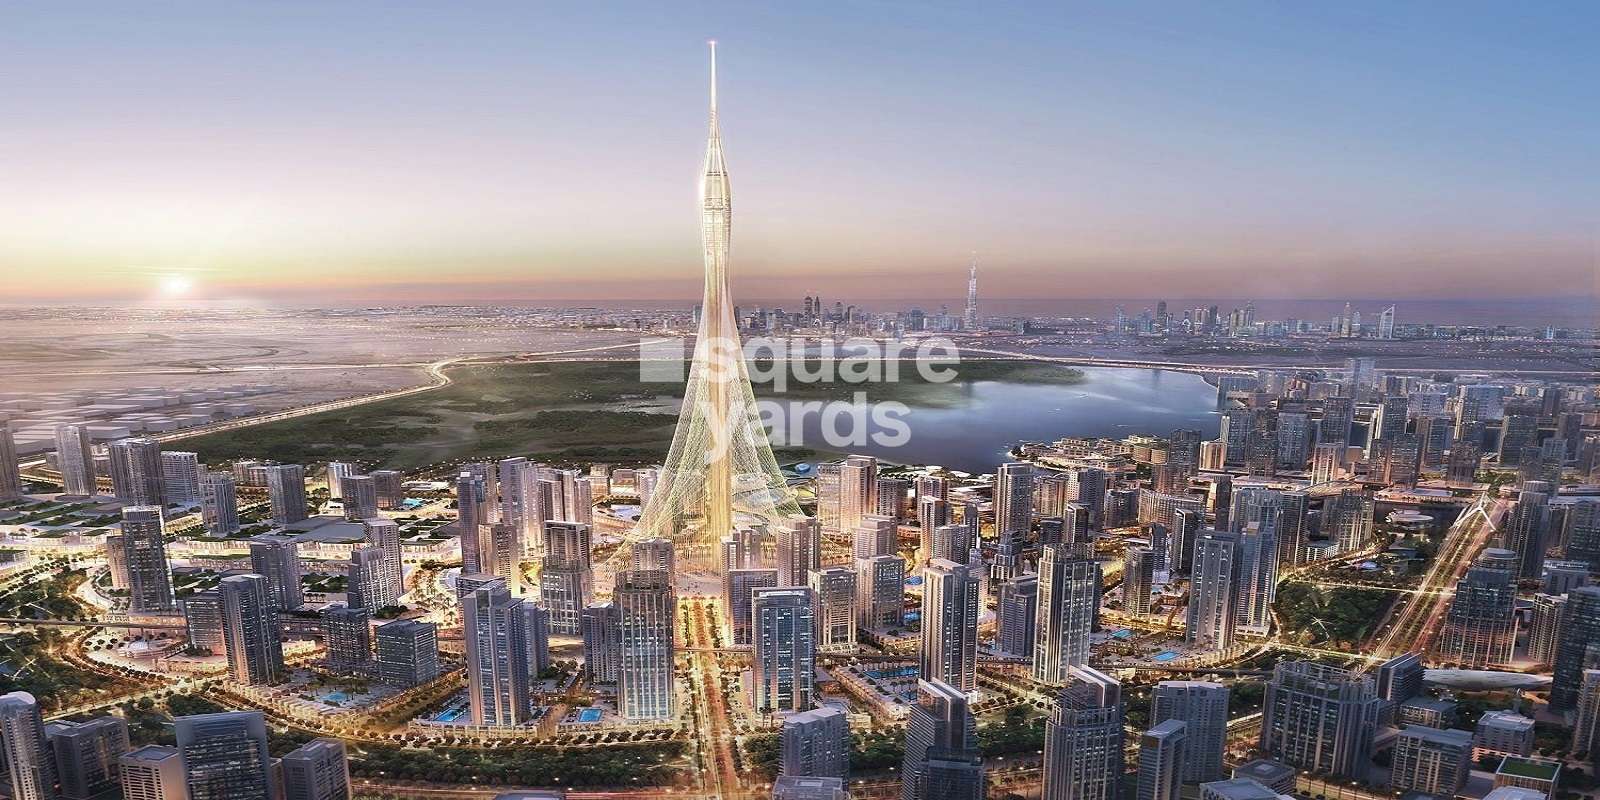 Dubai Creek Tower Cover Image